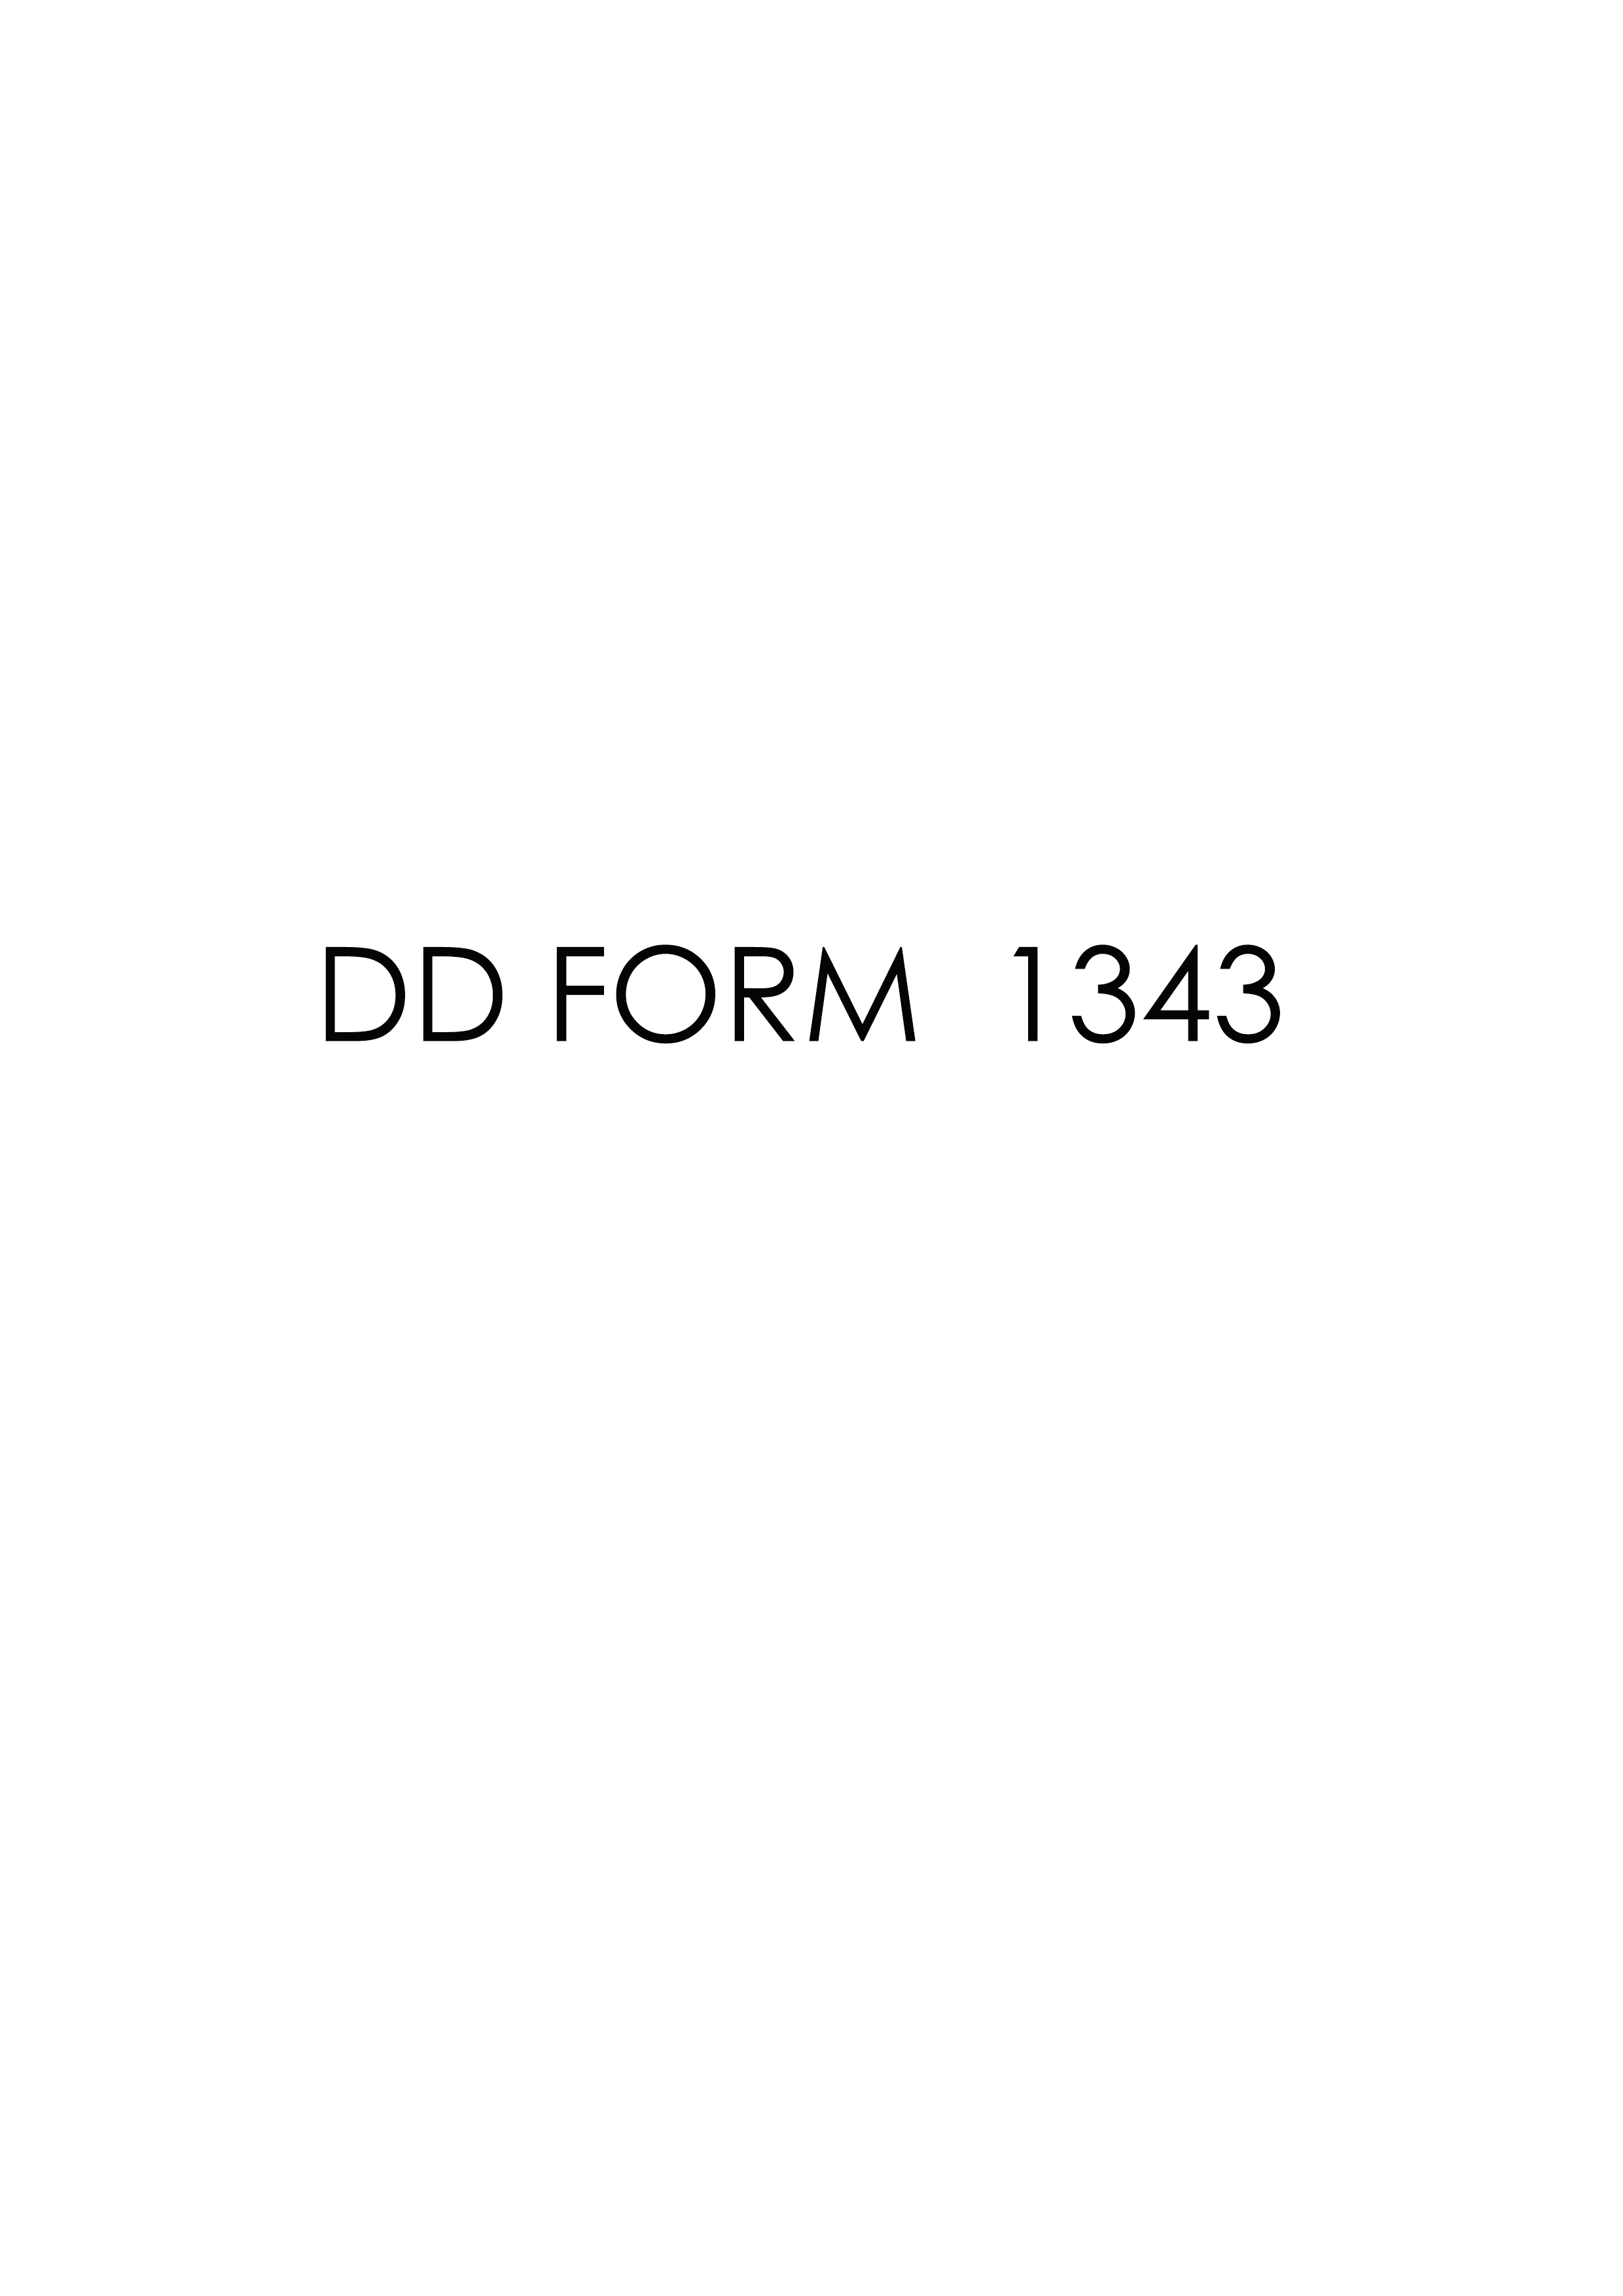 Download dd Form 1343